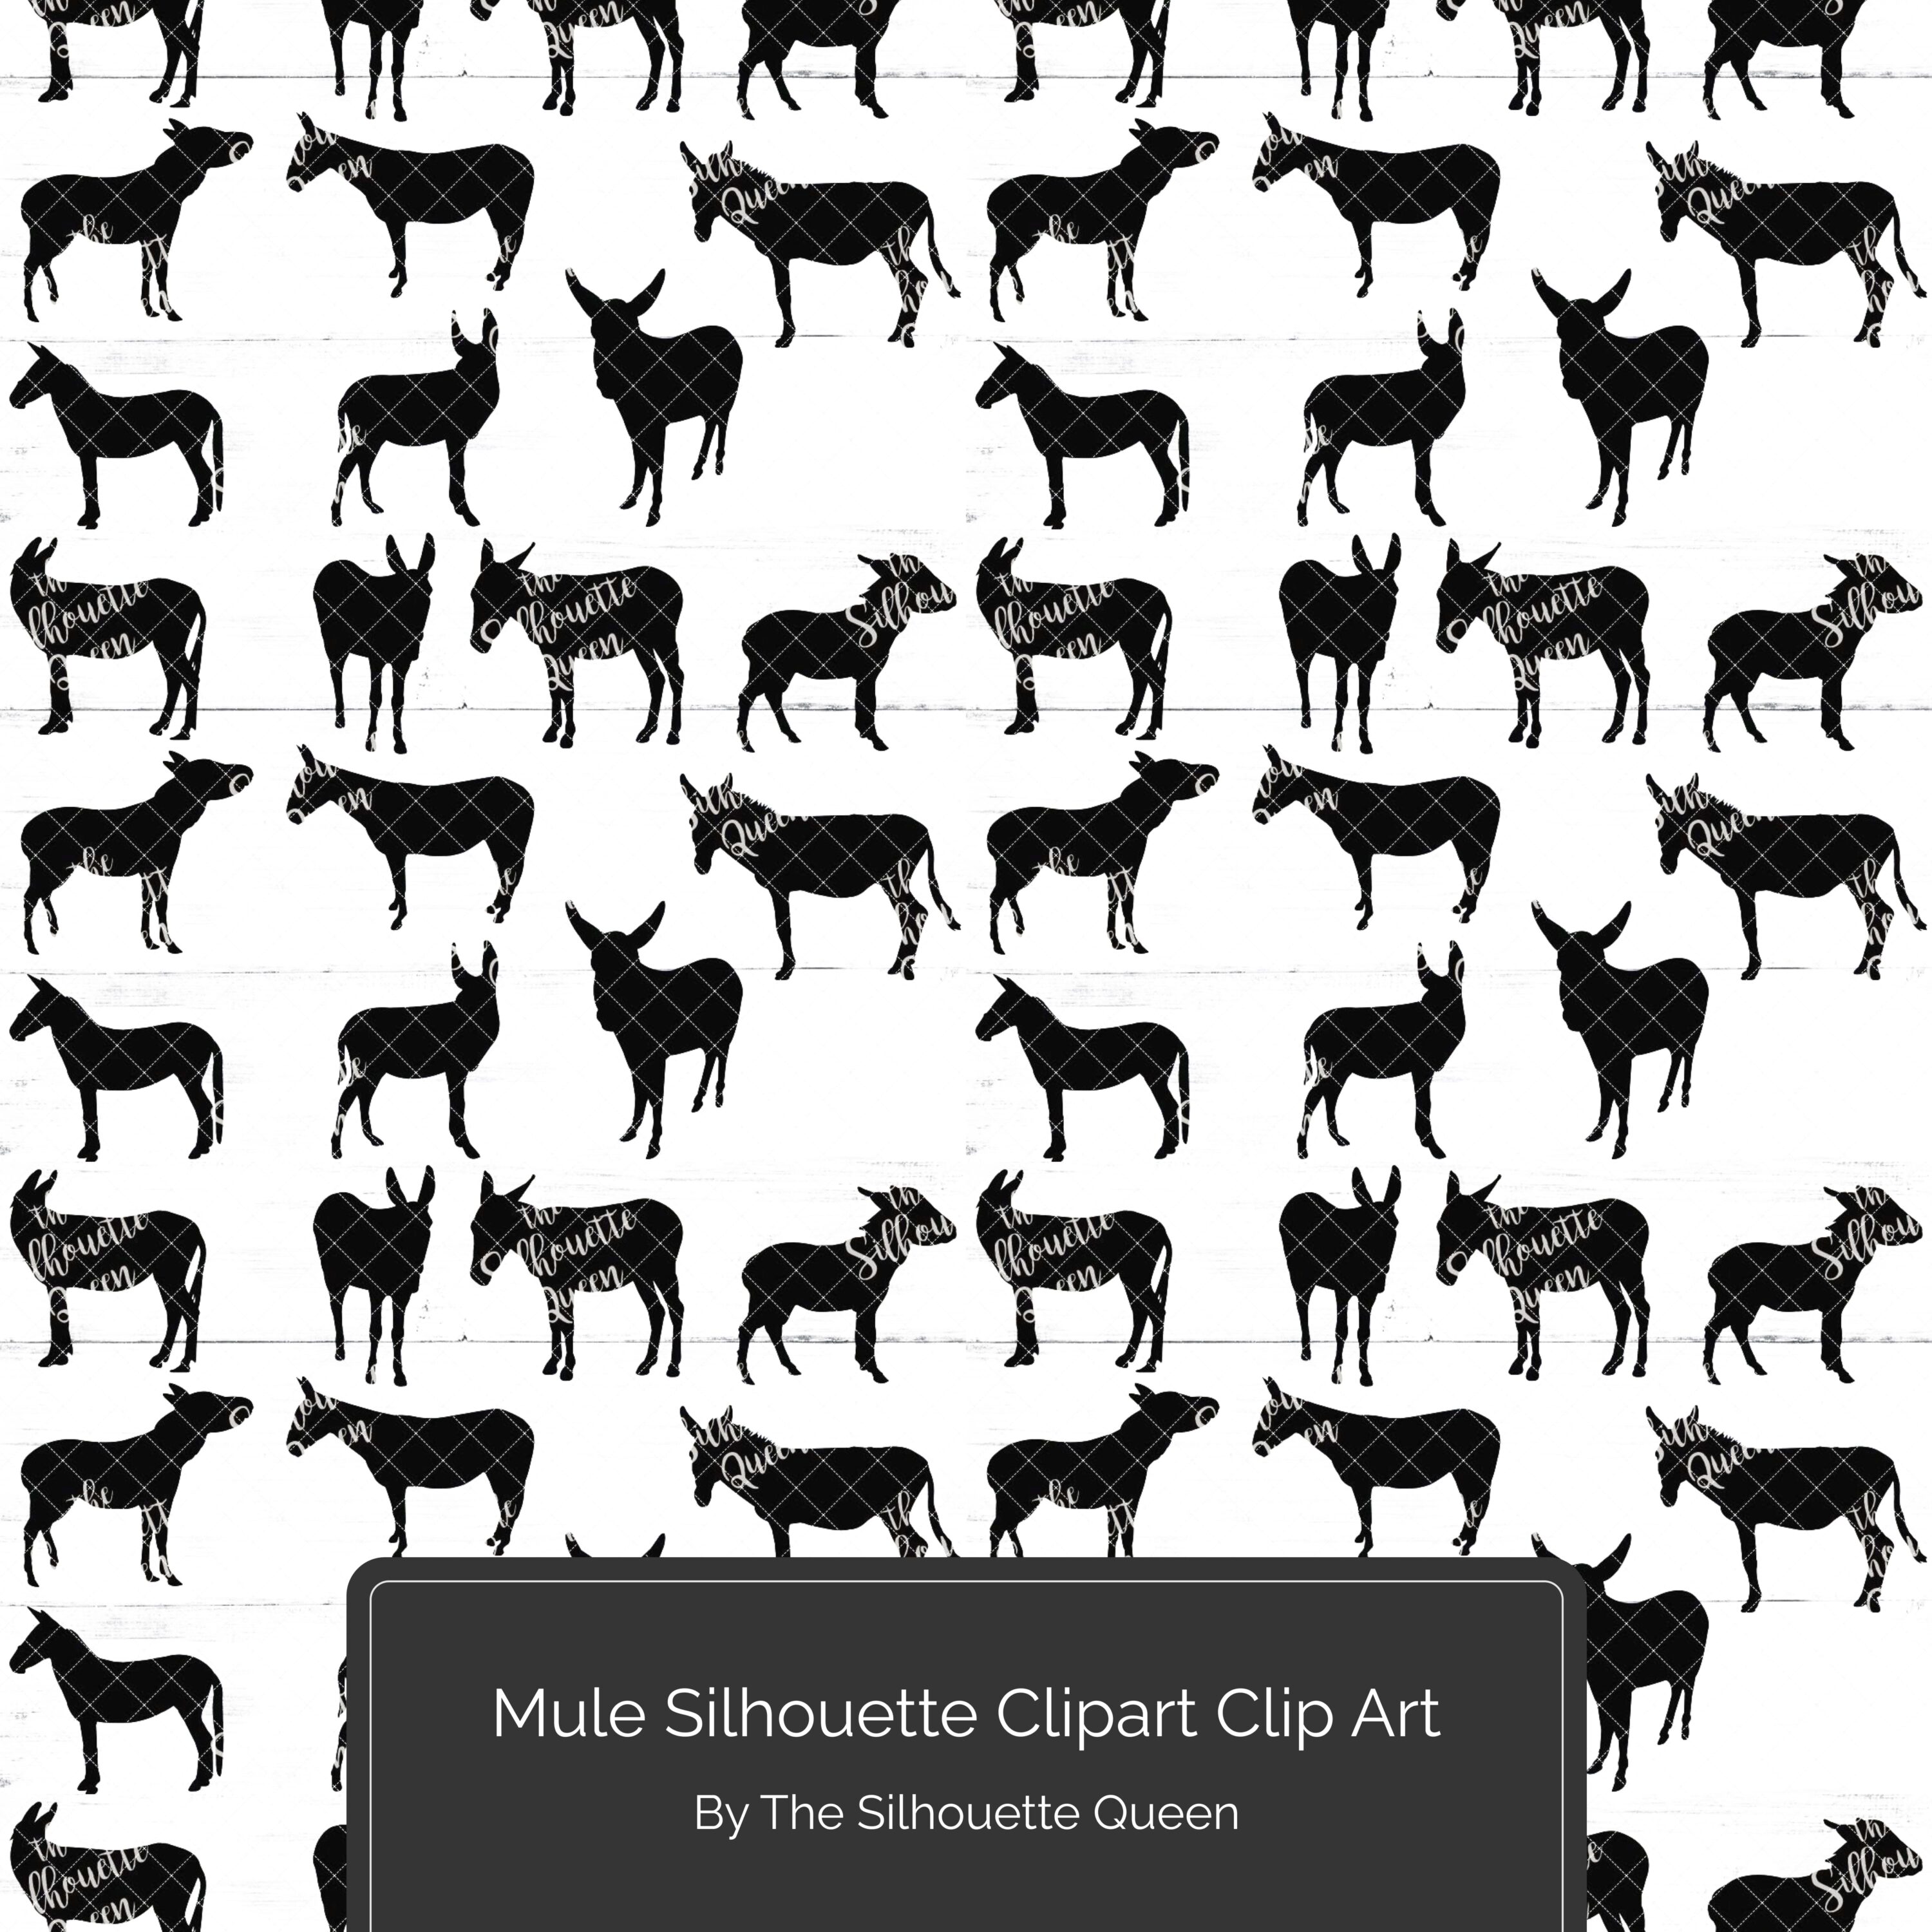 Mule Silhouette Clipart Clip Art.